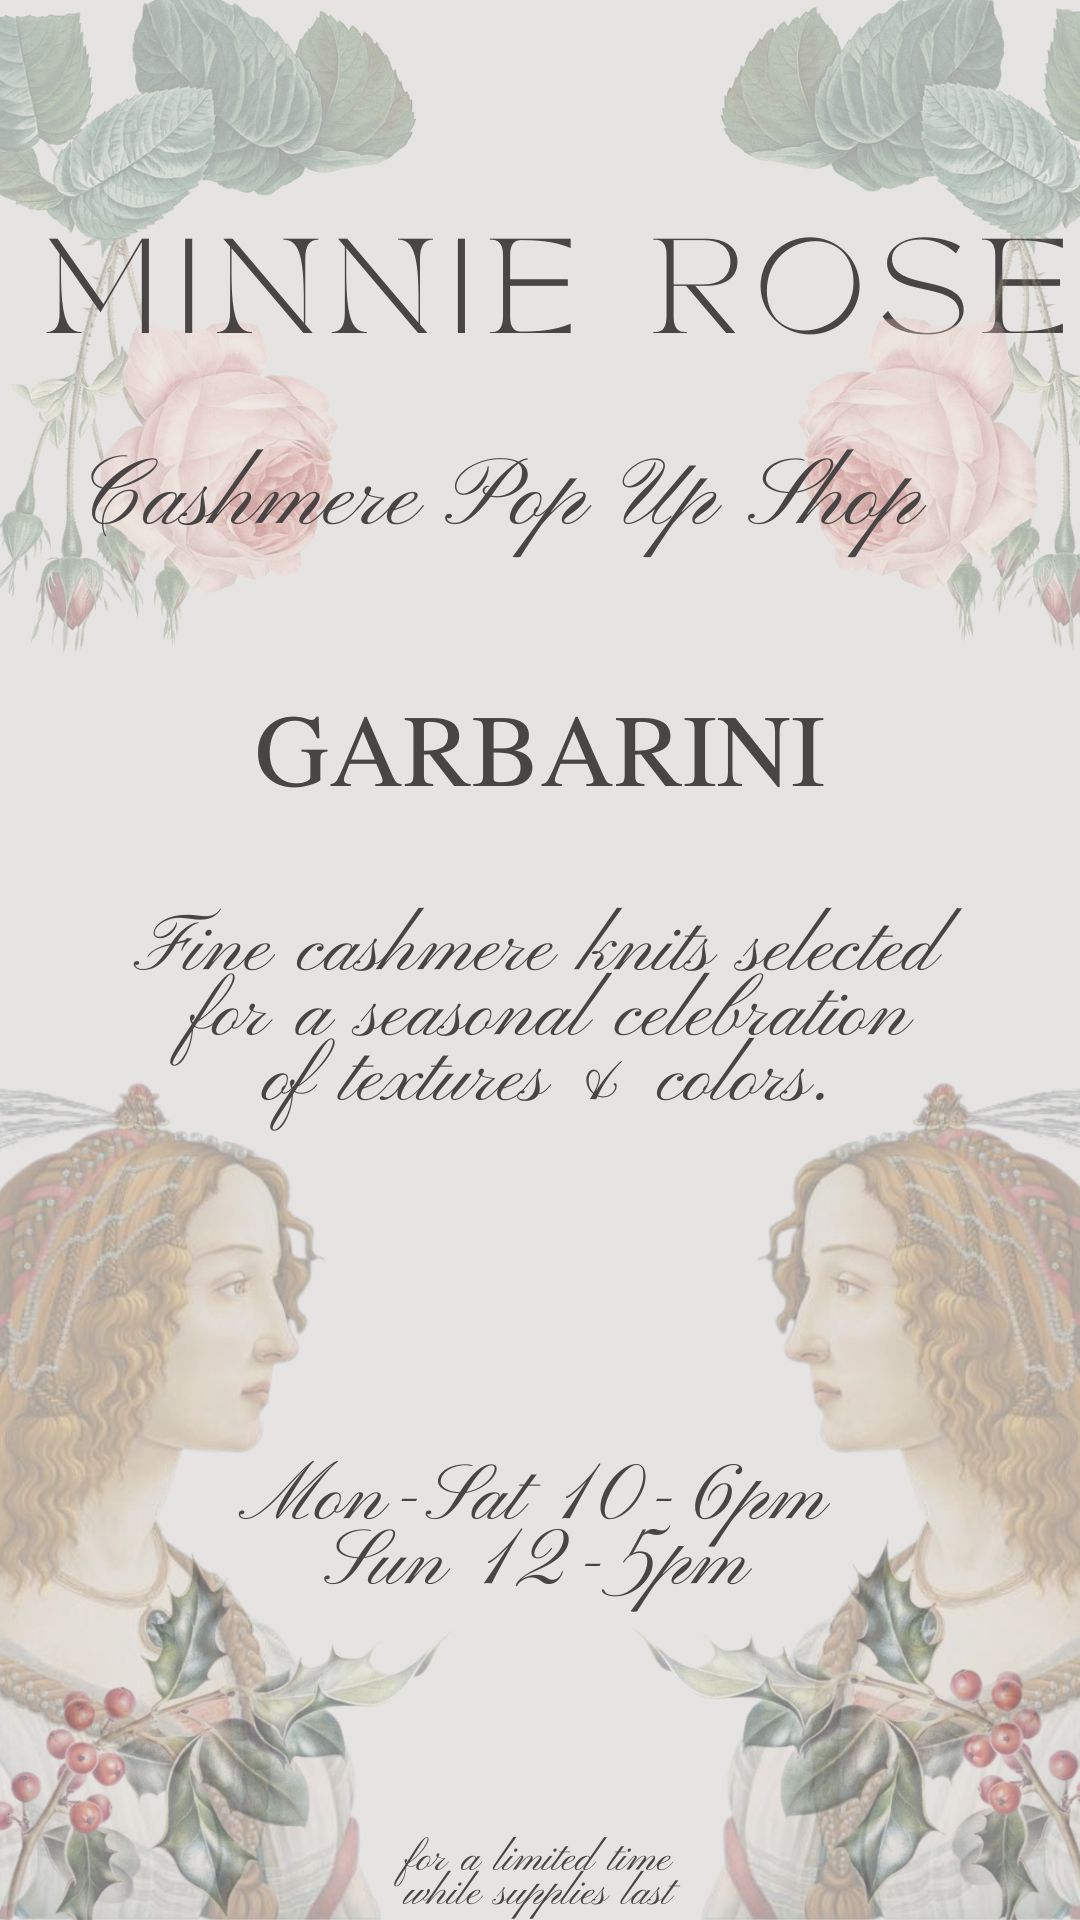 Minnie Rose Pop Up Shop at Garbarini